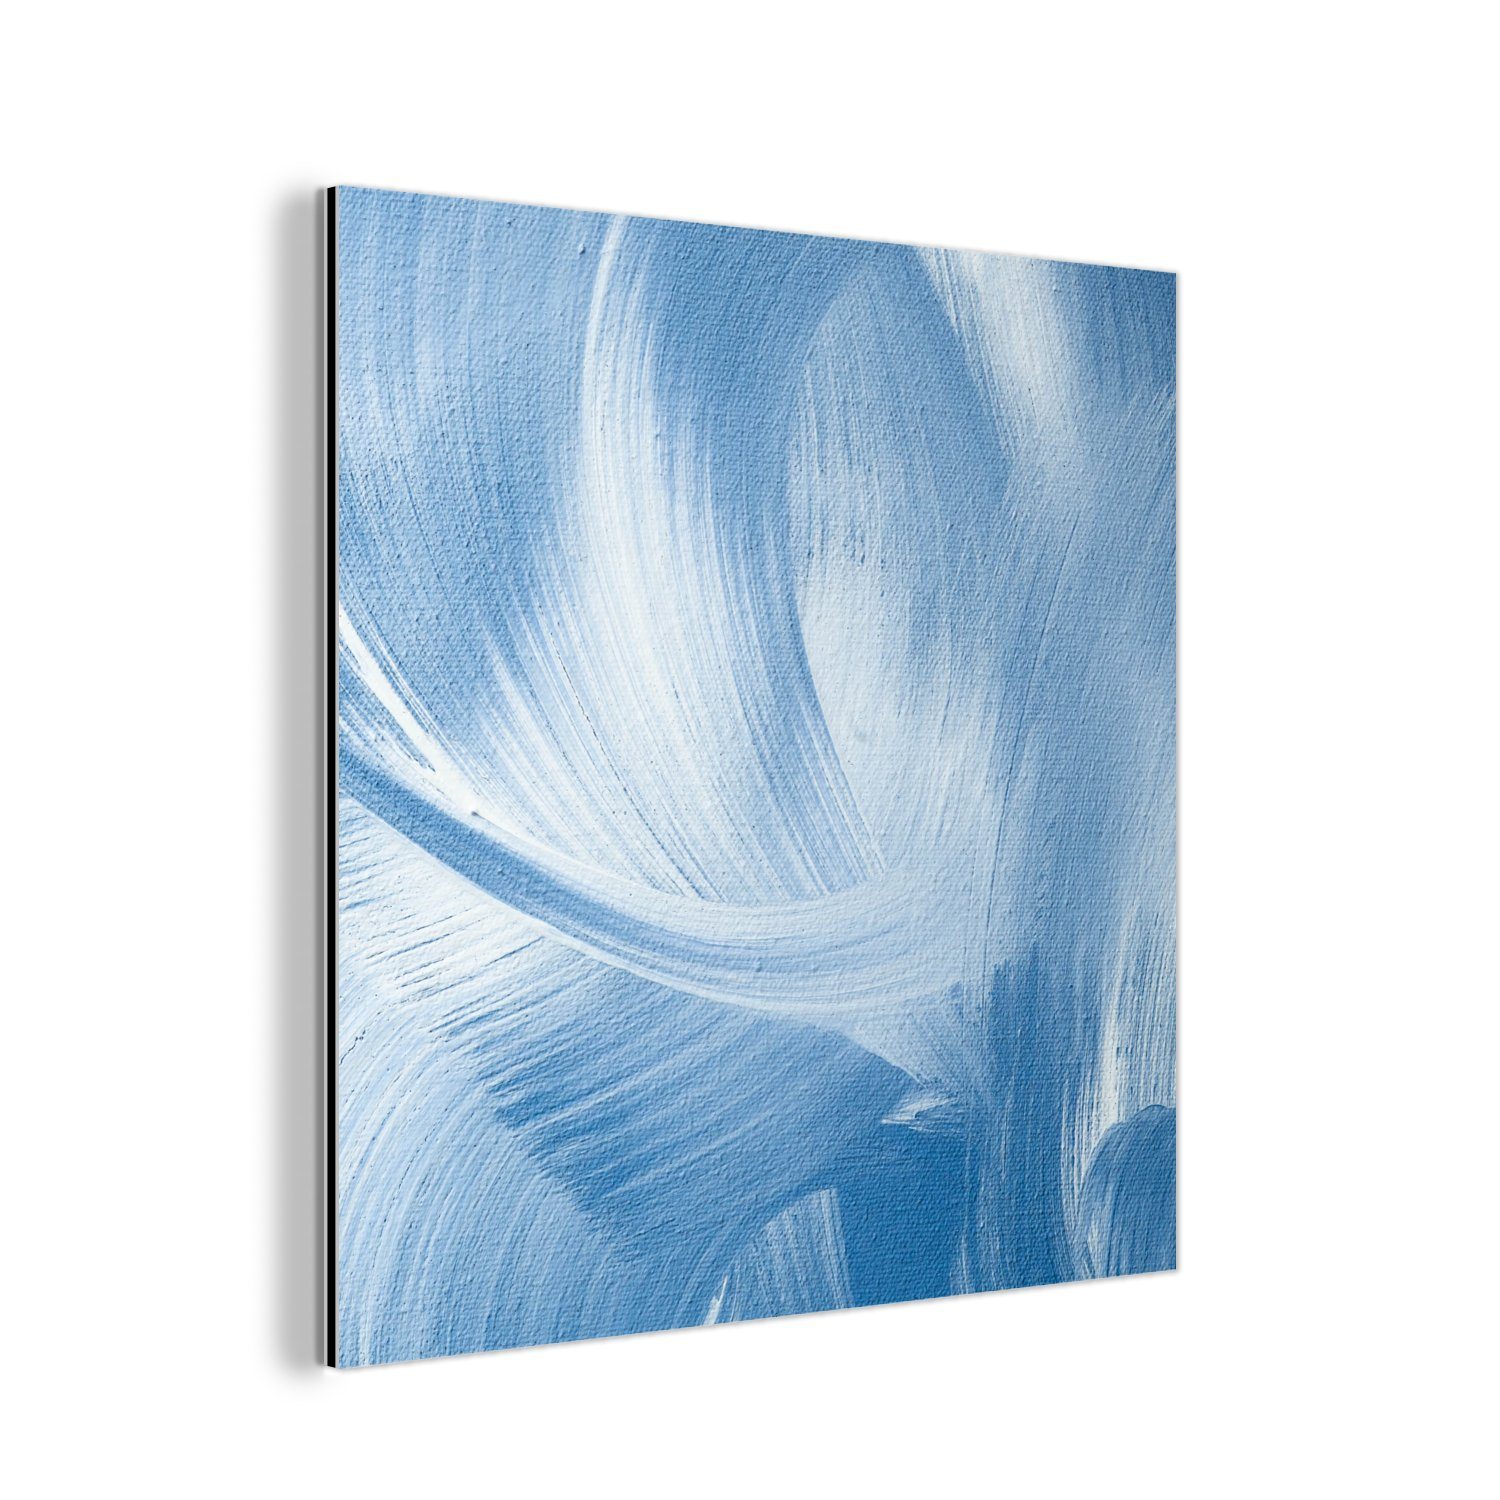 MuchoWow Metallbild Blau - Acrylfarbe Gestaltung, aus Alu-Dibond-Druck, Gemälde deko St), Metall, - Aluminium (1